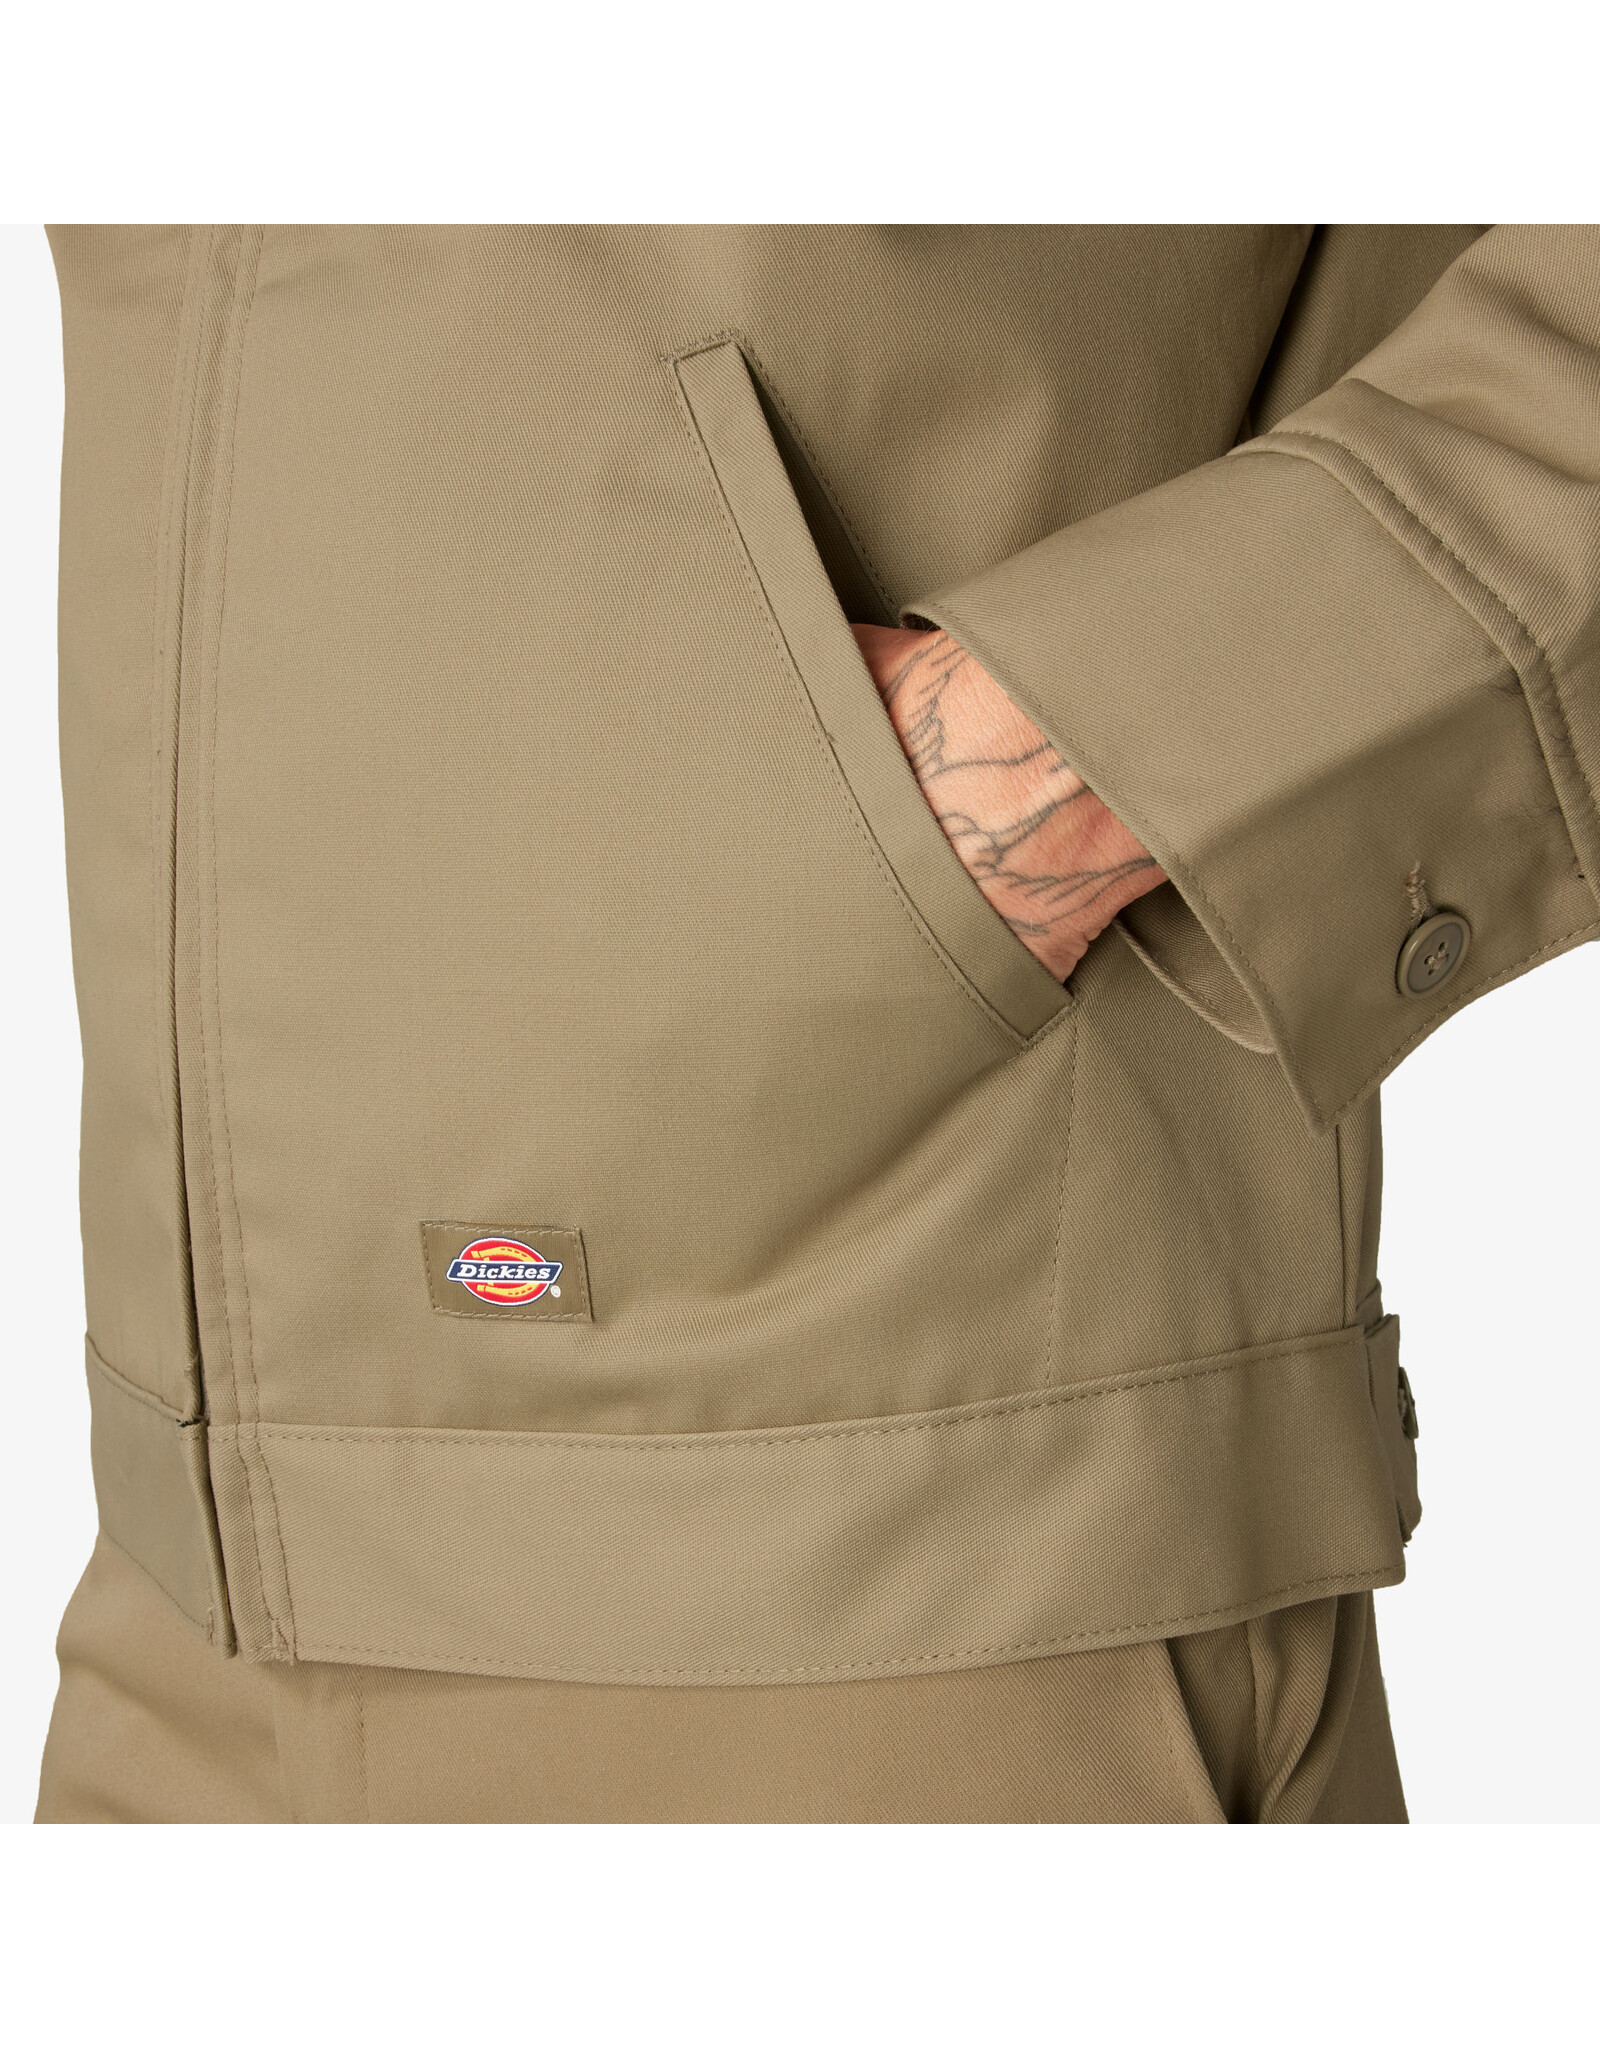 DICKIES Insulated Eisenhower Jacket Khaki - TJ15KH